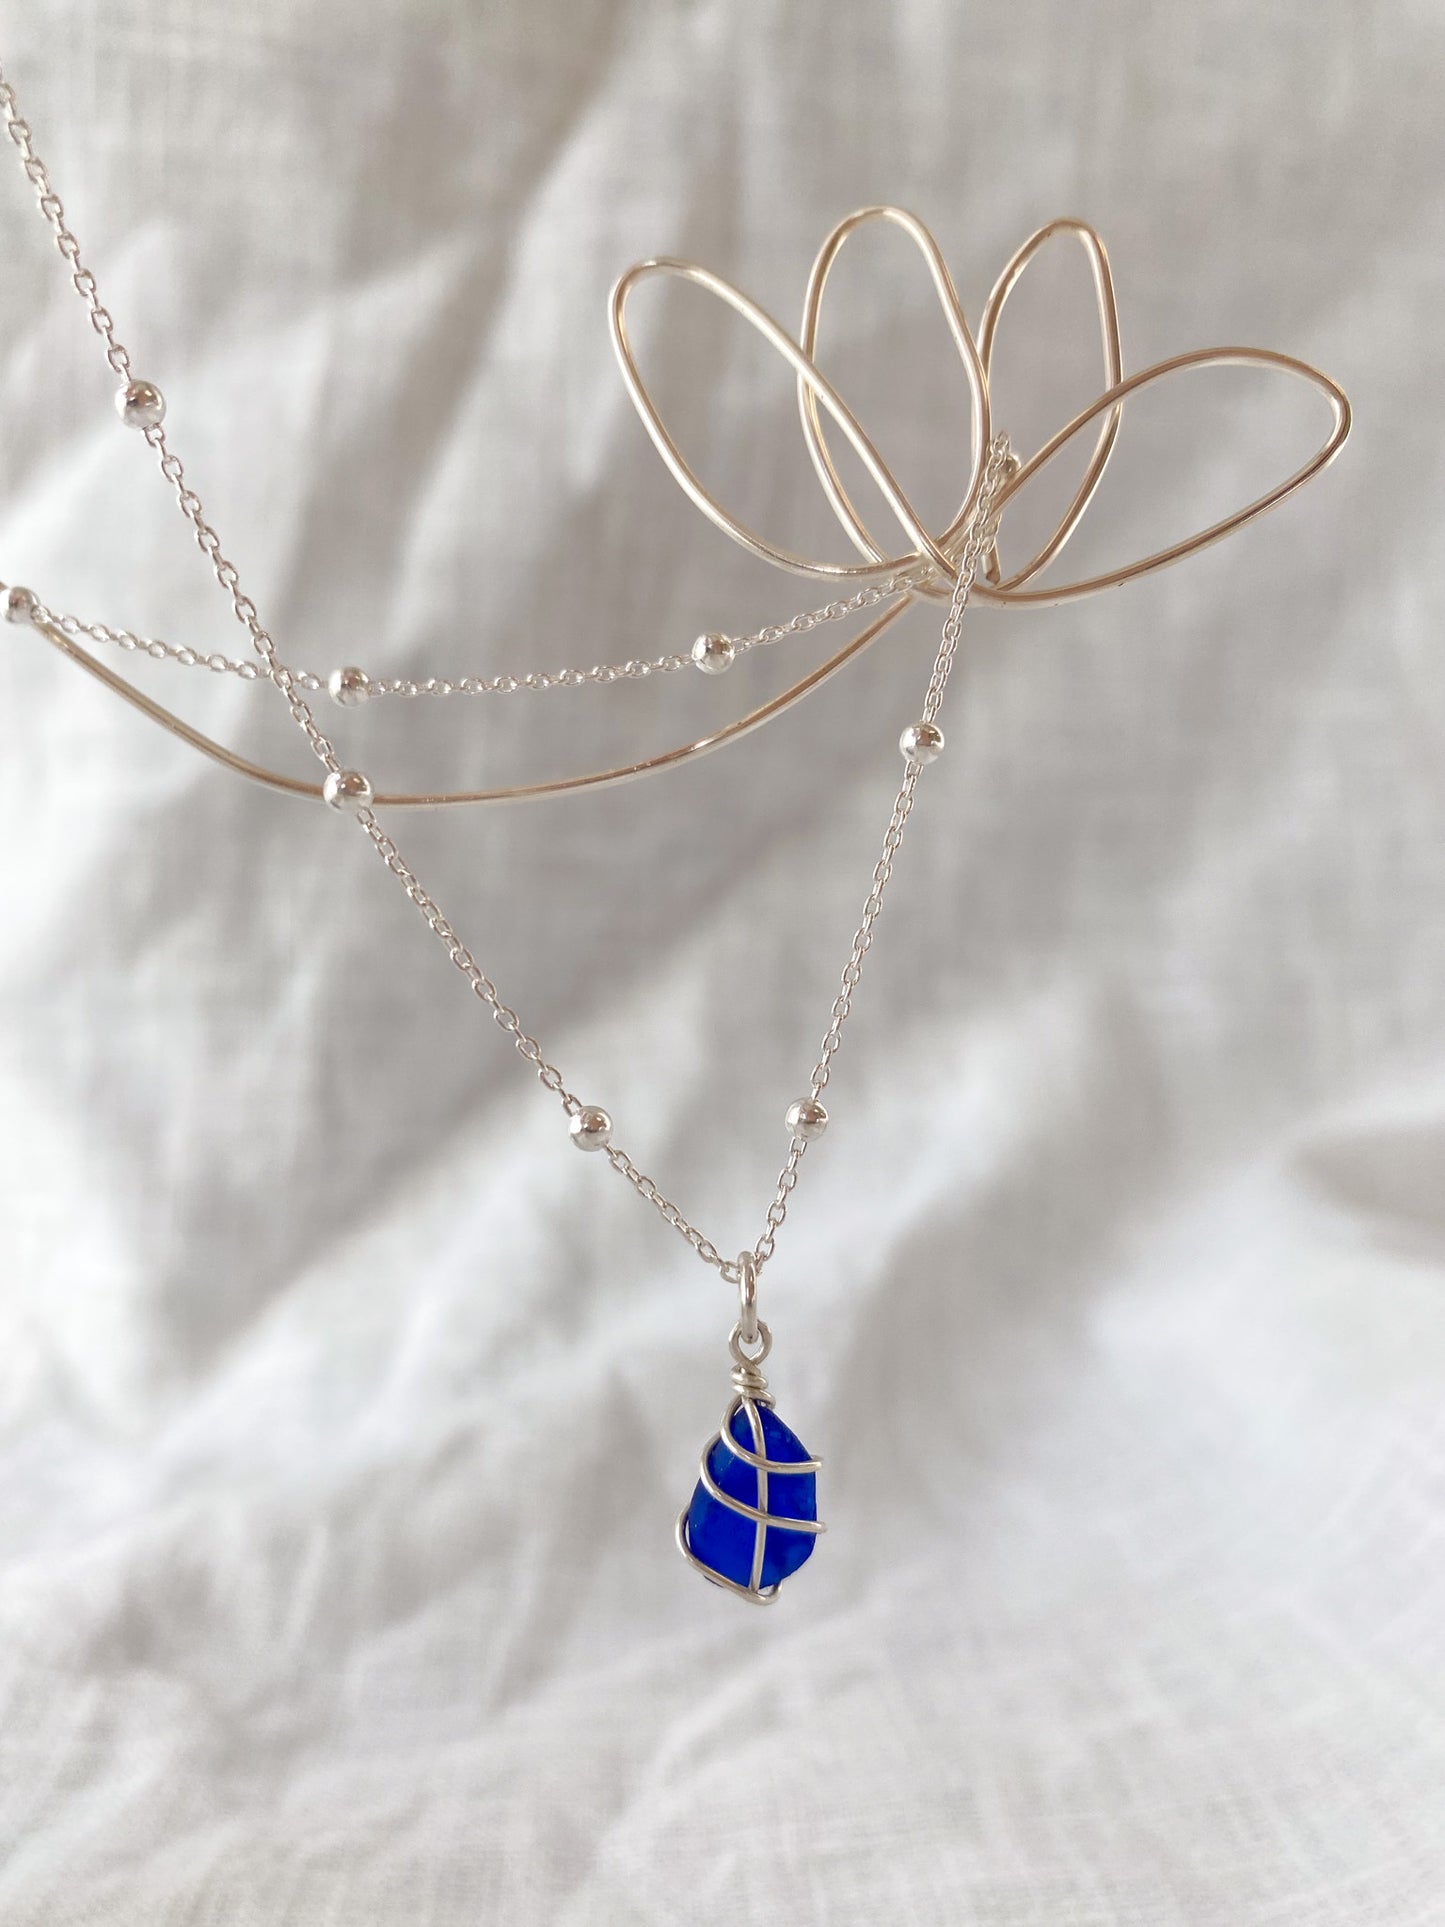 Eleanor Necklace in Silver & Cobalt Blue